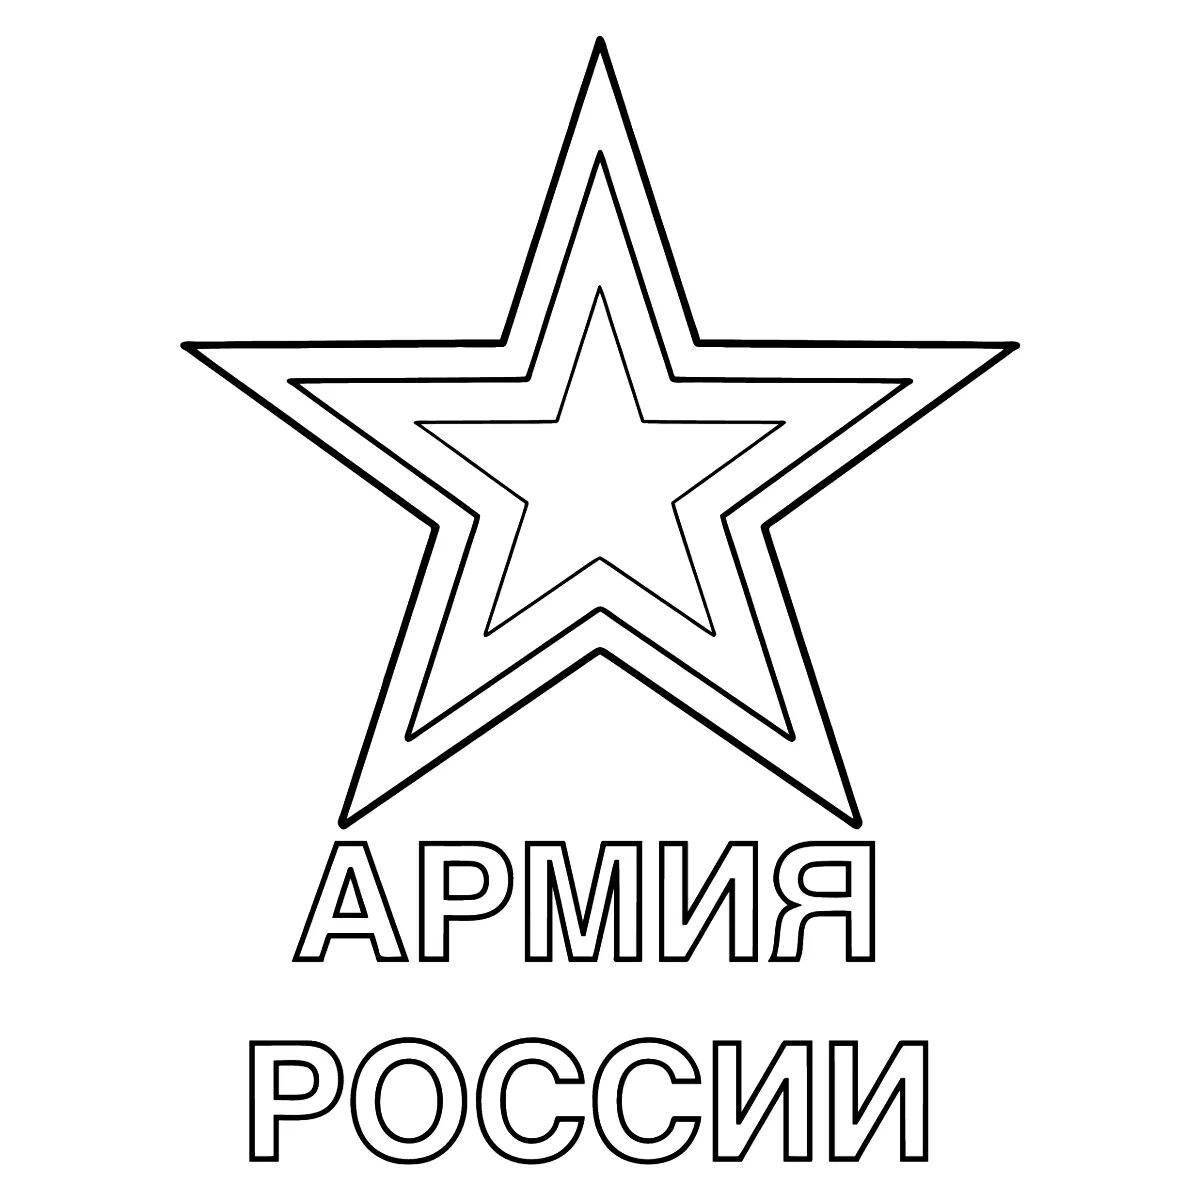 Звезда героя советского союза #5